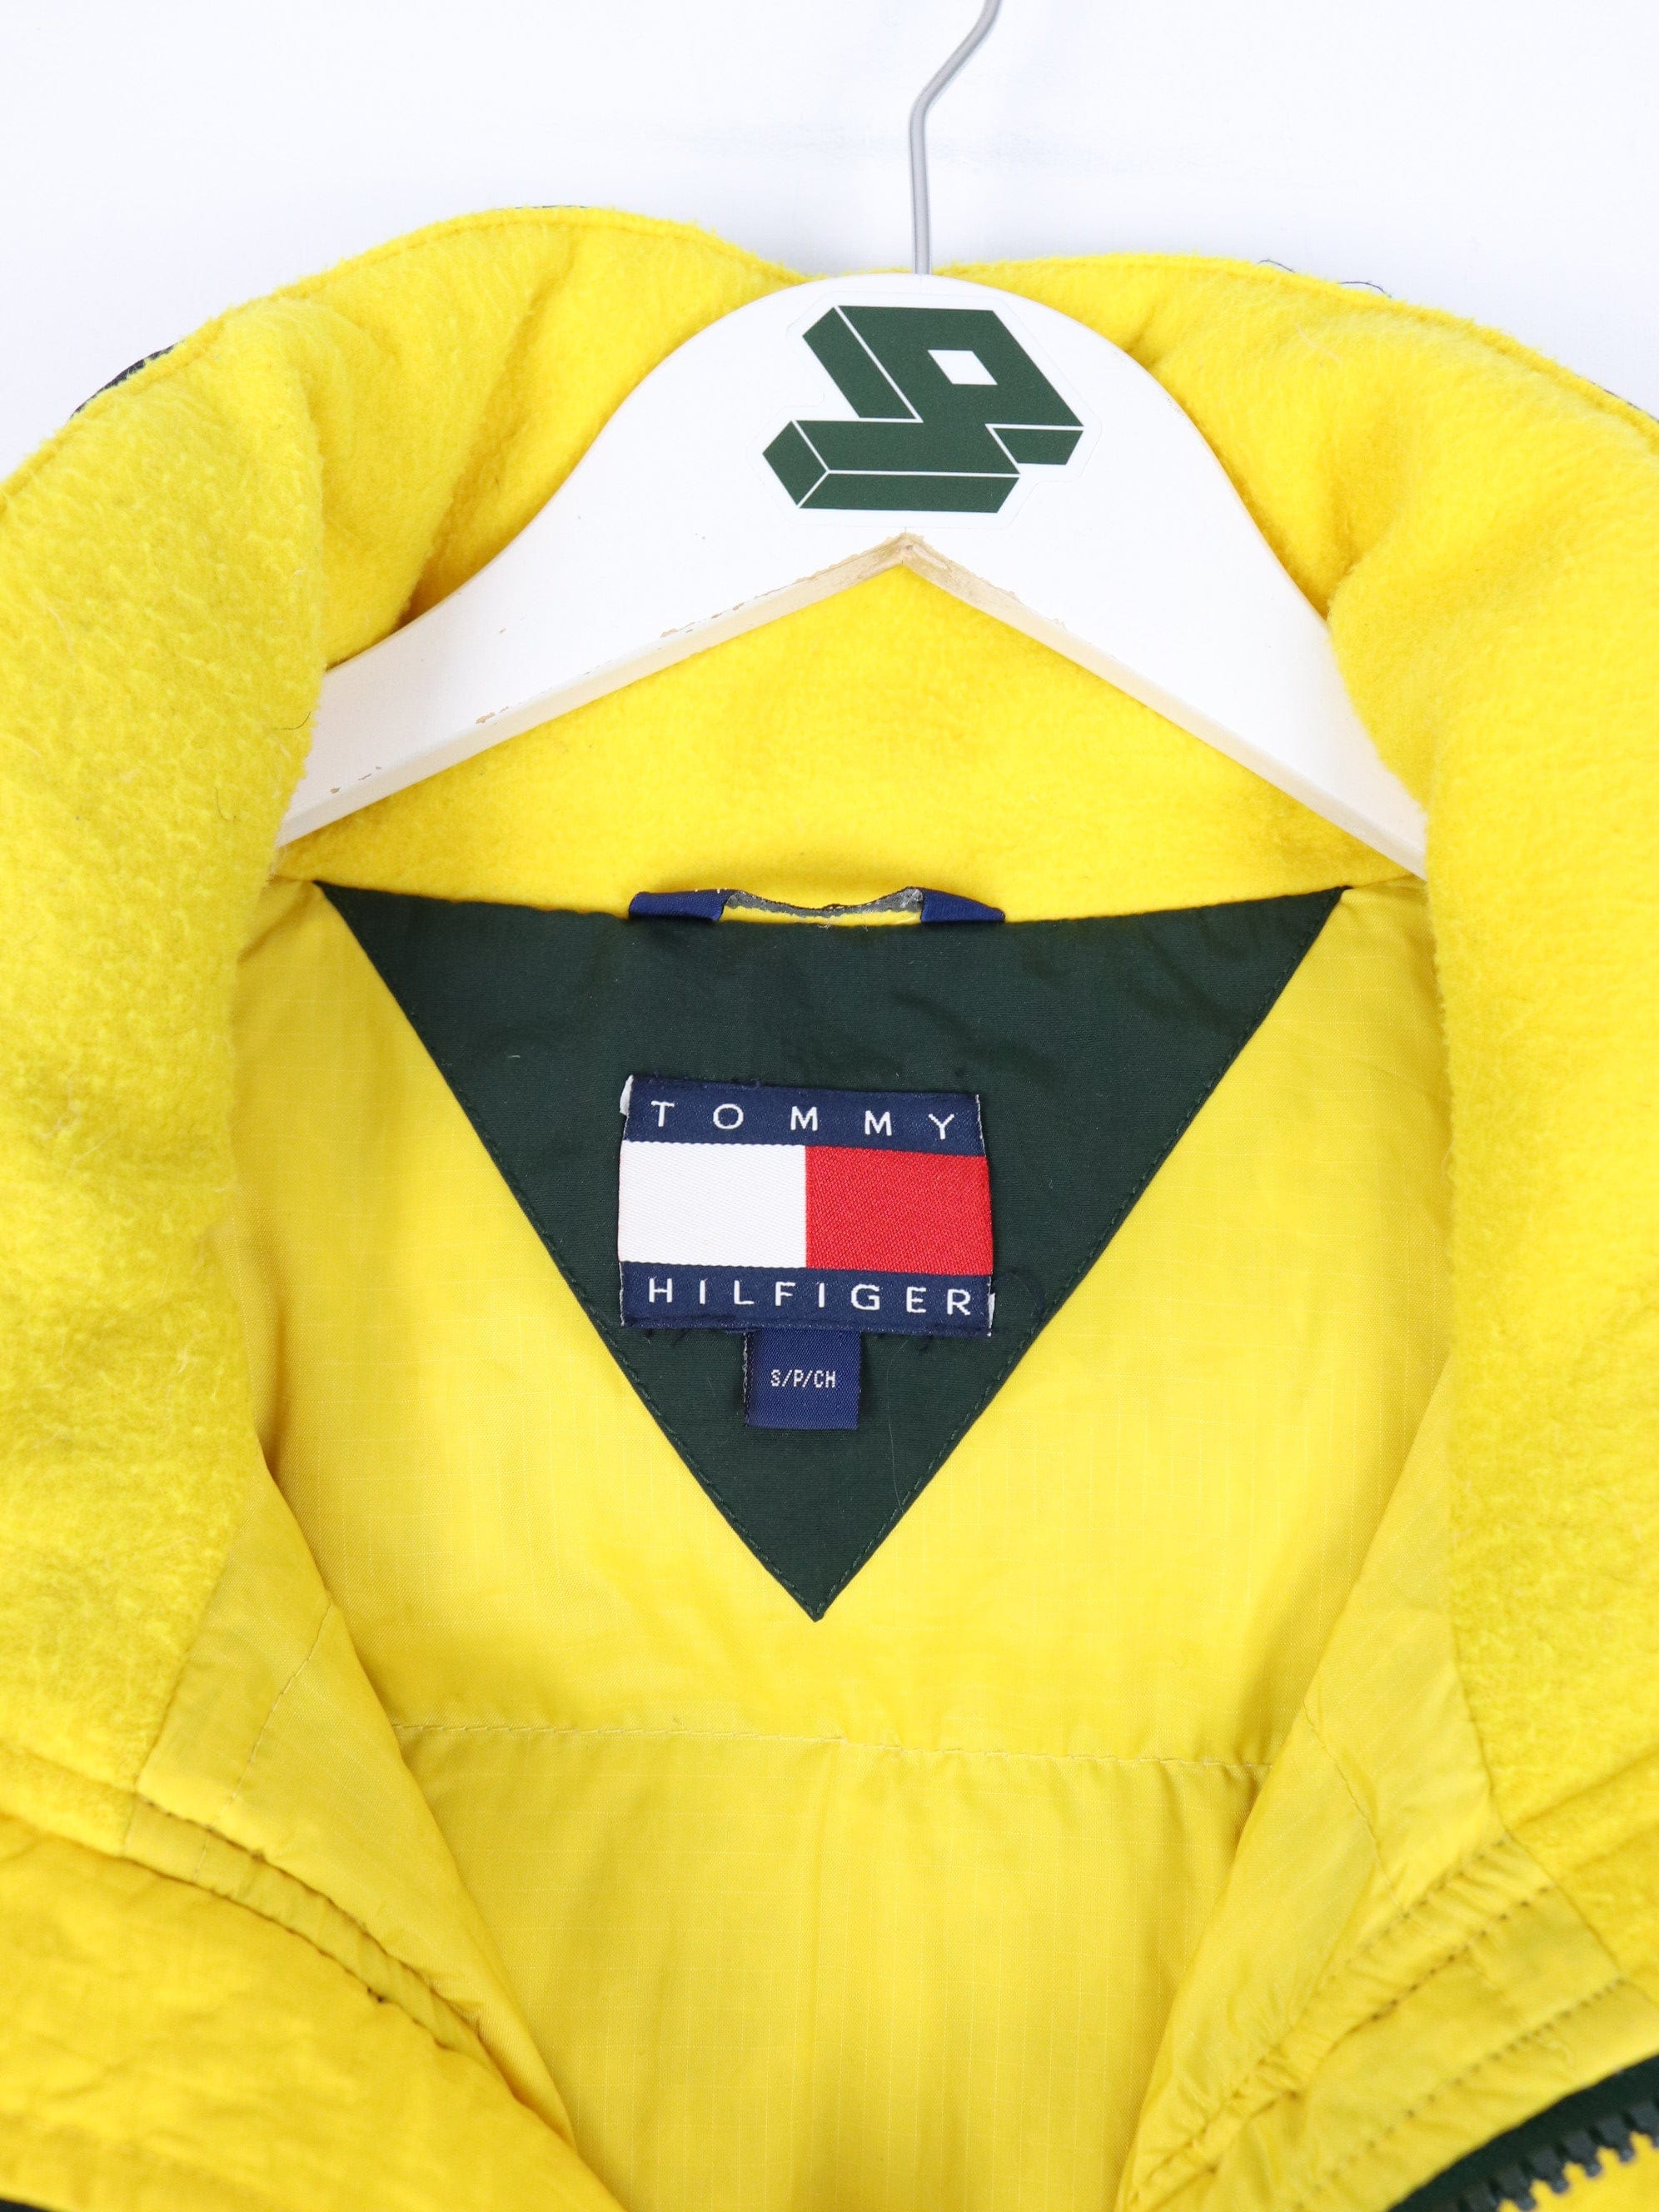 Vintage Tommy Hilfiger Jacket Mens Small Green Coat 90s – Proper